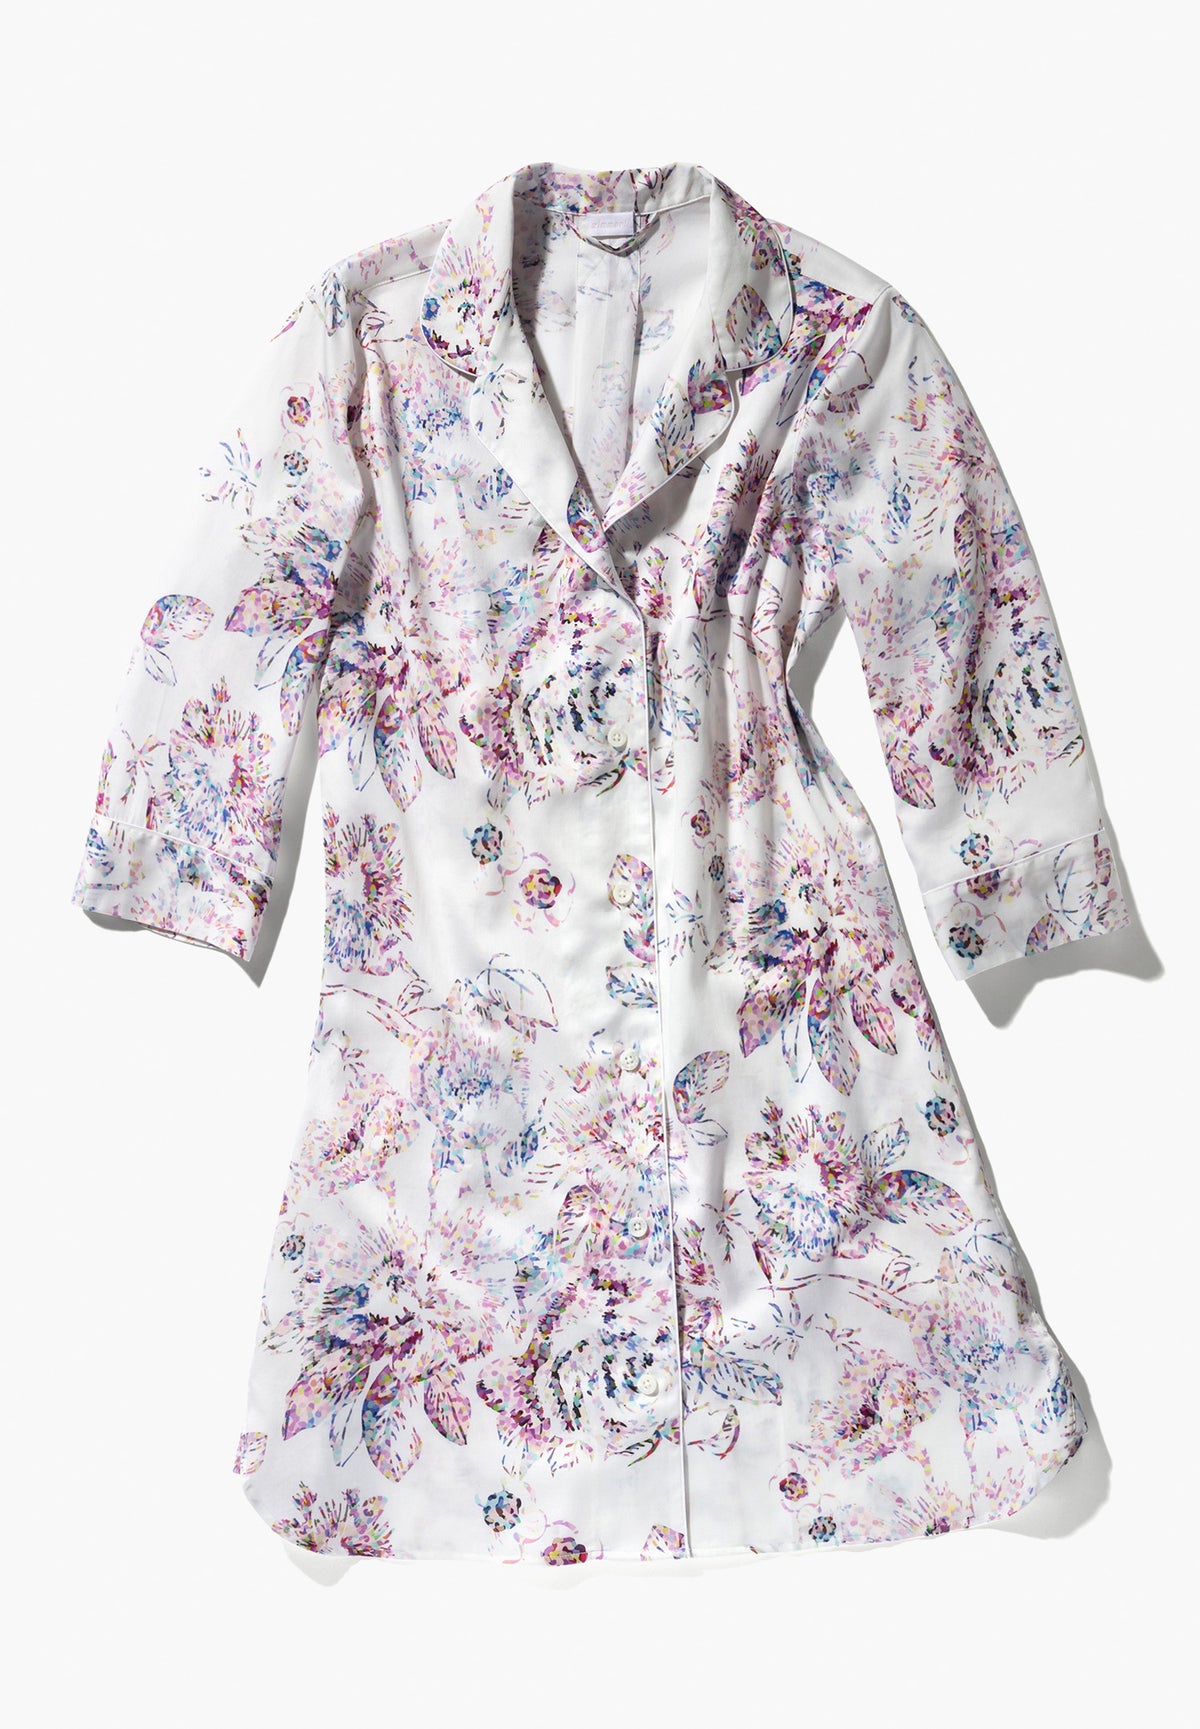 Cotton Sateen Print | Tee-shirt de nuit manches 3/4 - pixel flowers